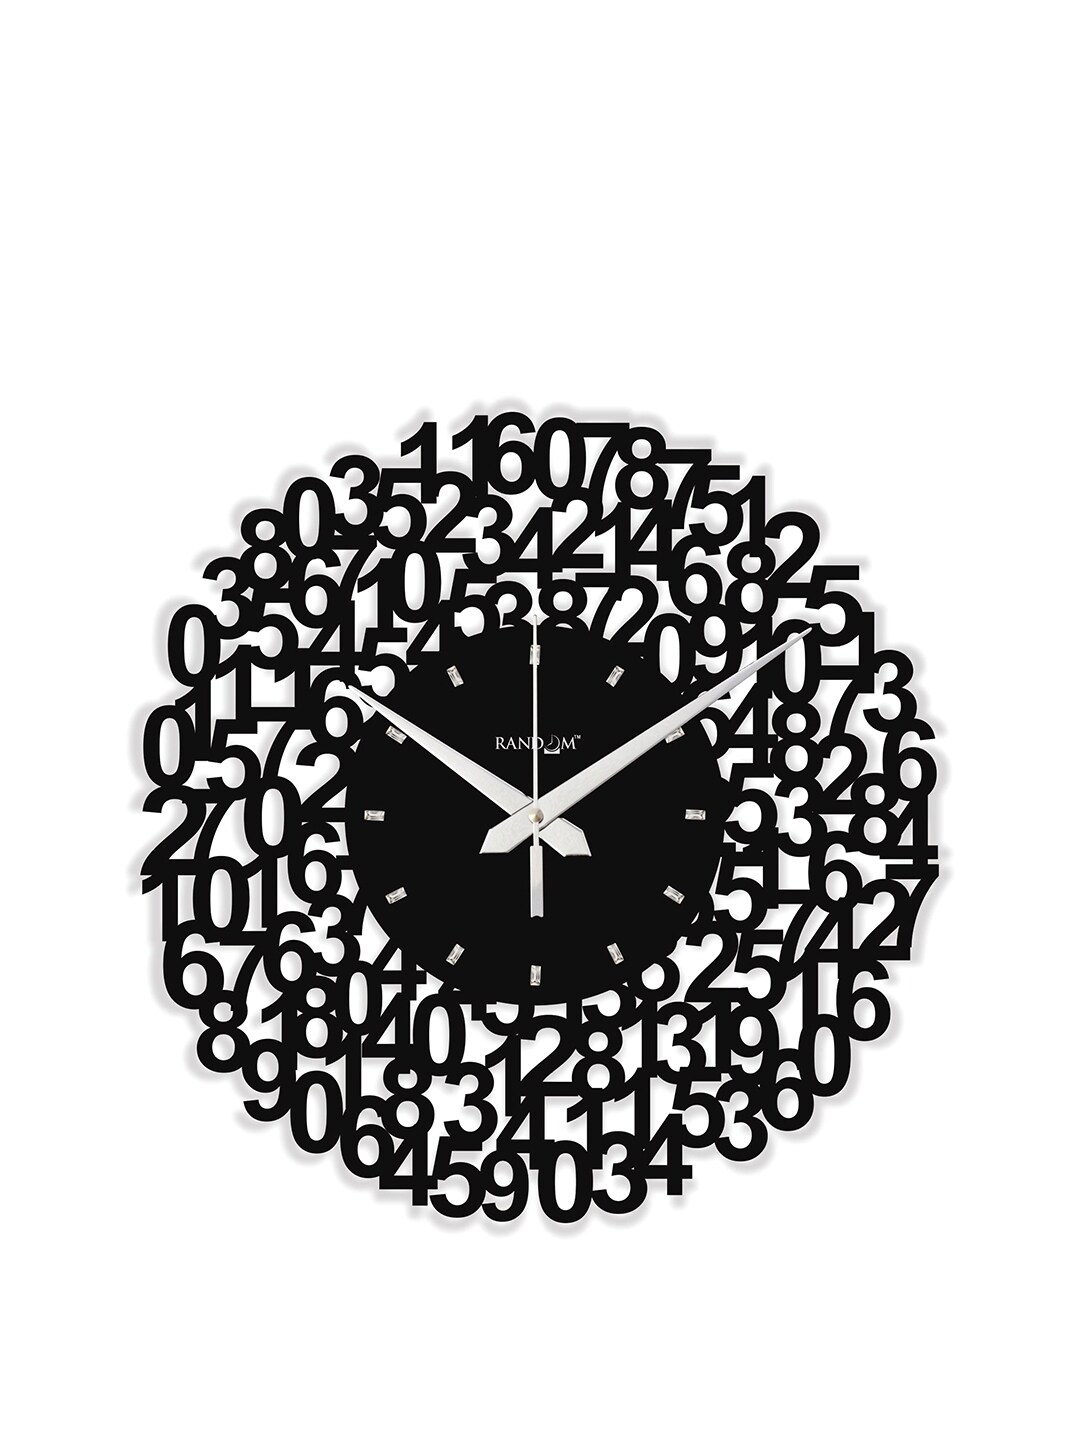 RANDOM Black Dial Web World Series 30.48 cm Analogue Wall Clock Price in India